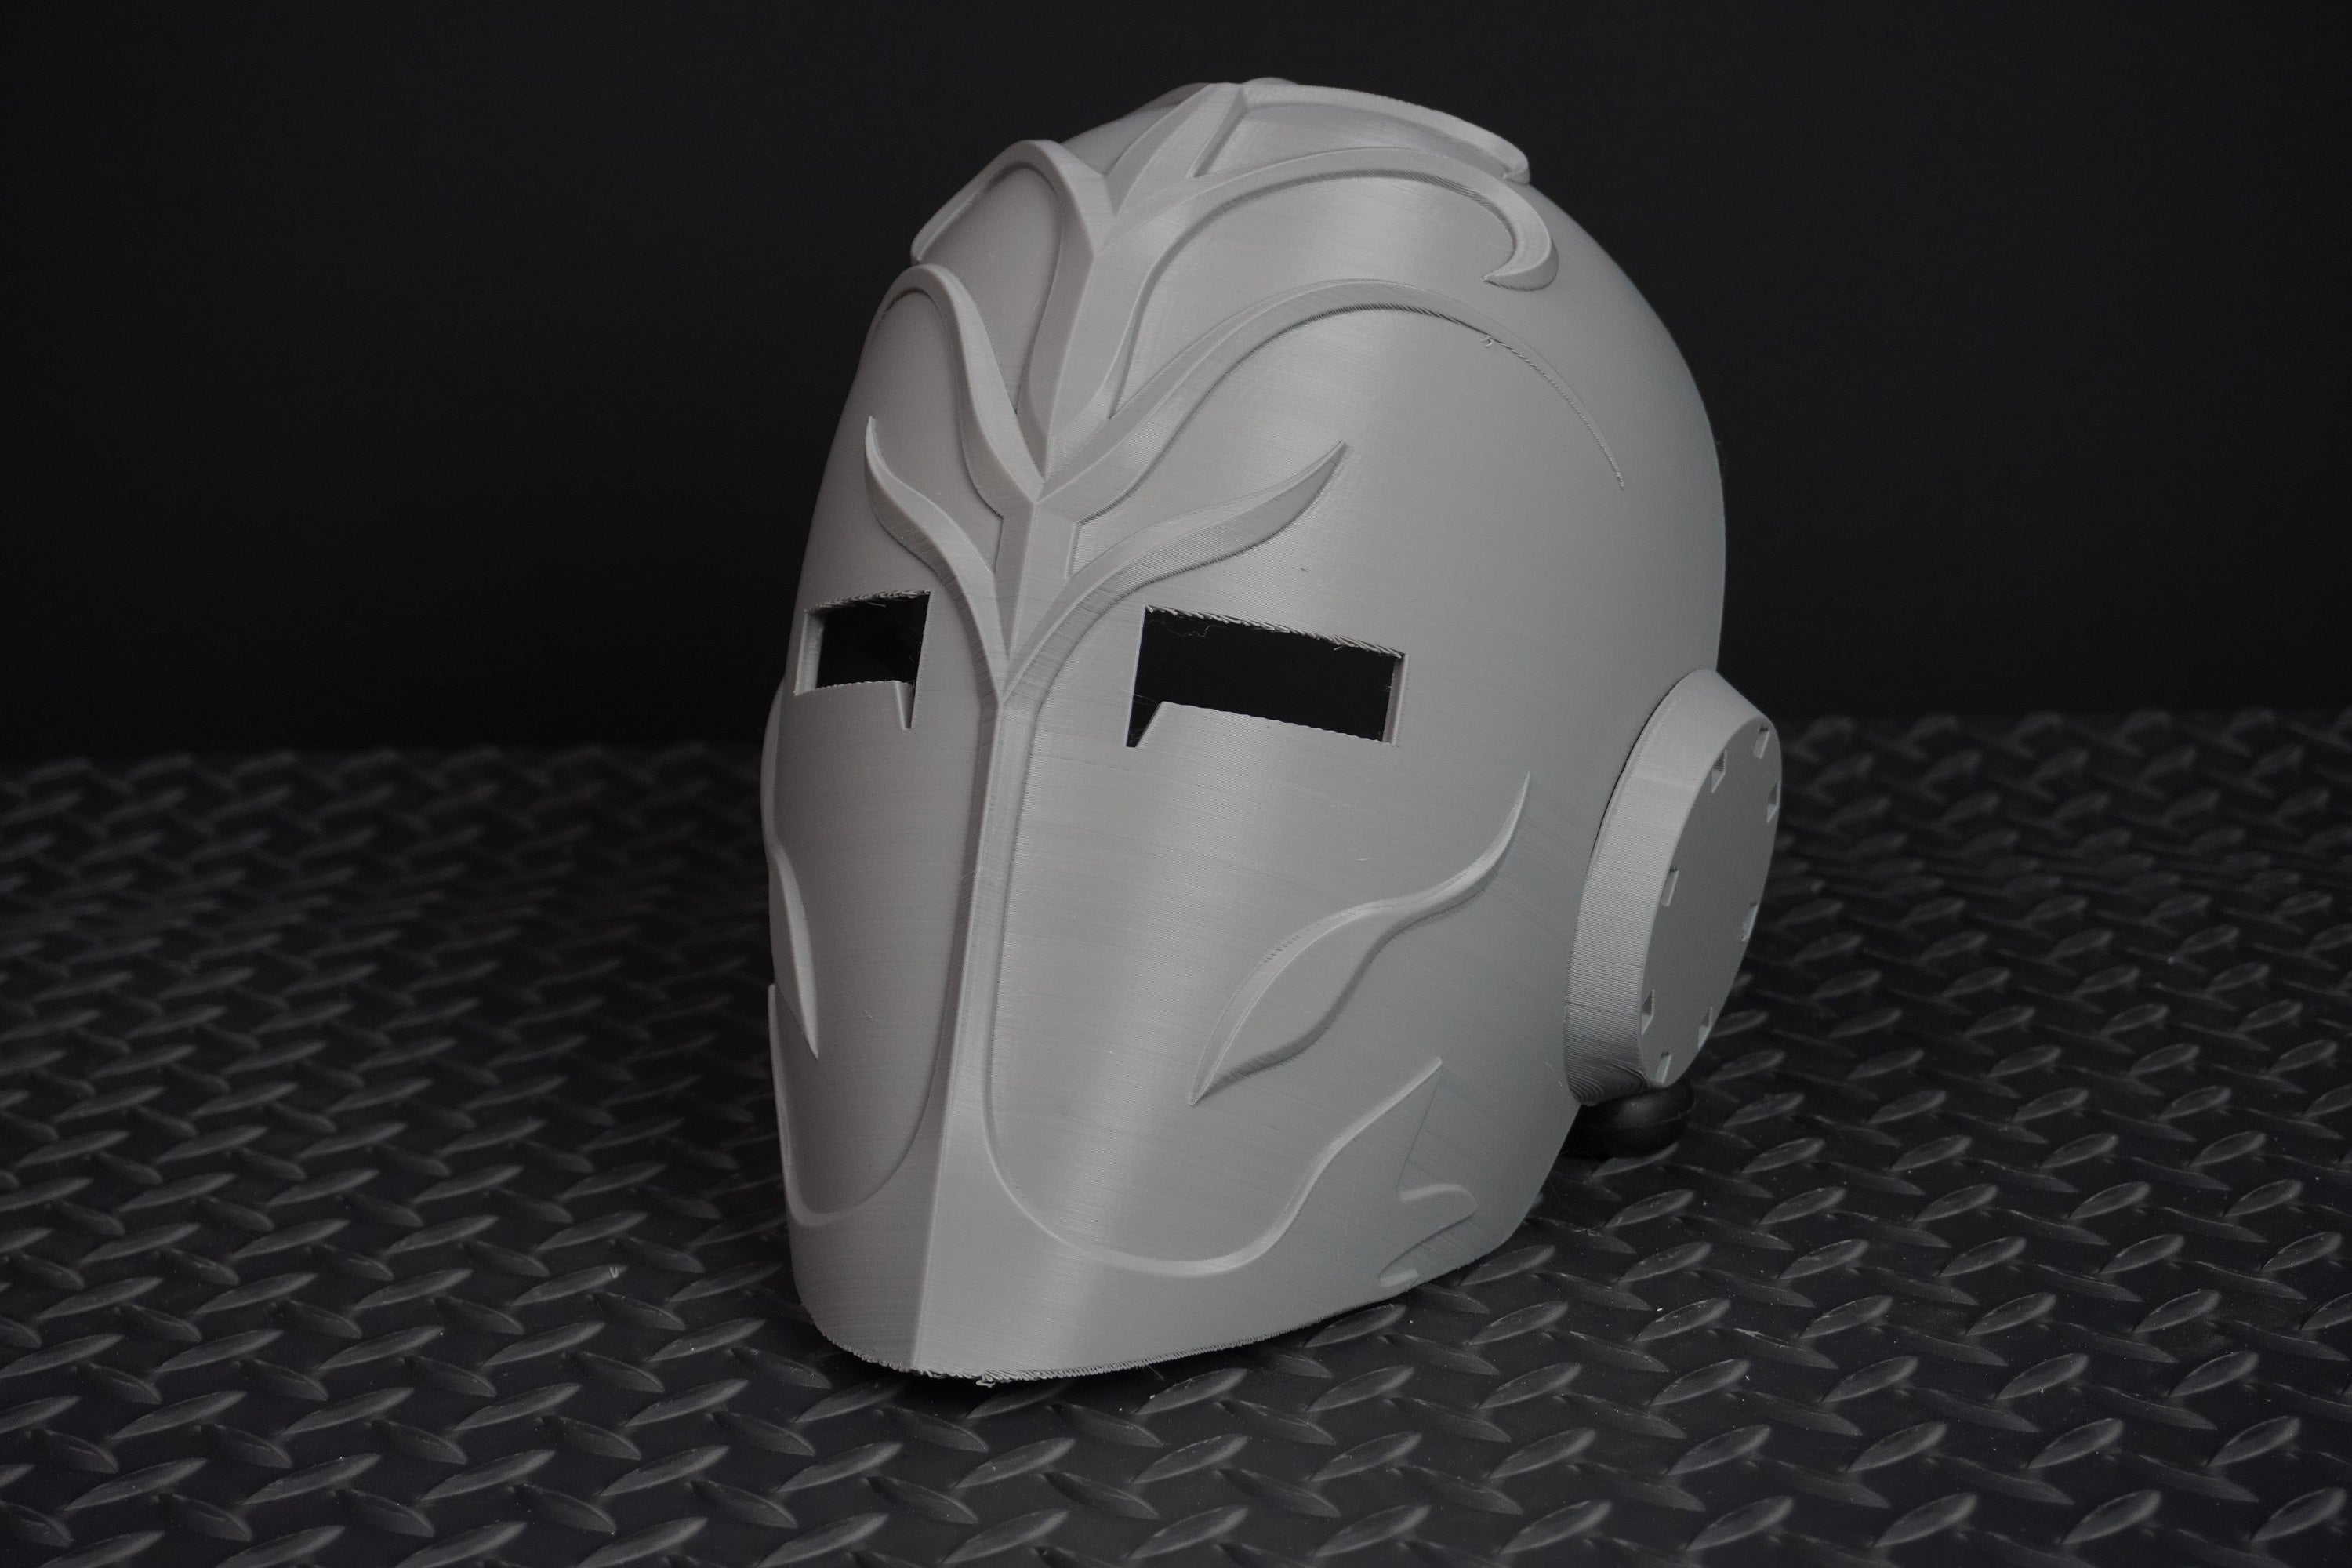 Jedi Temple Guard Mask - DIY